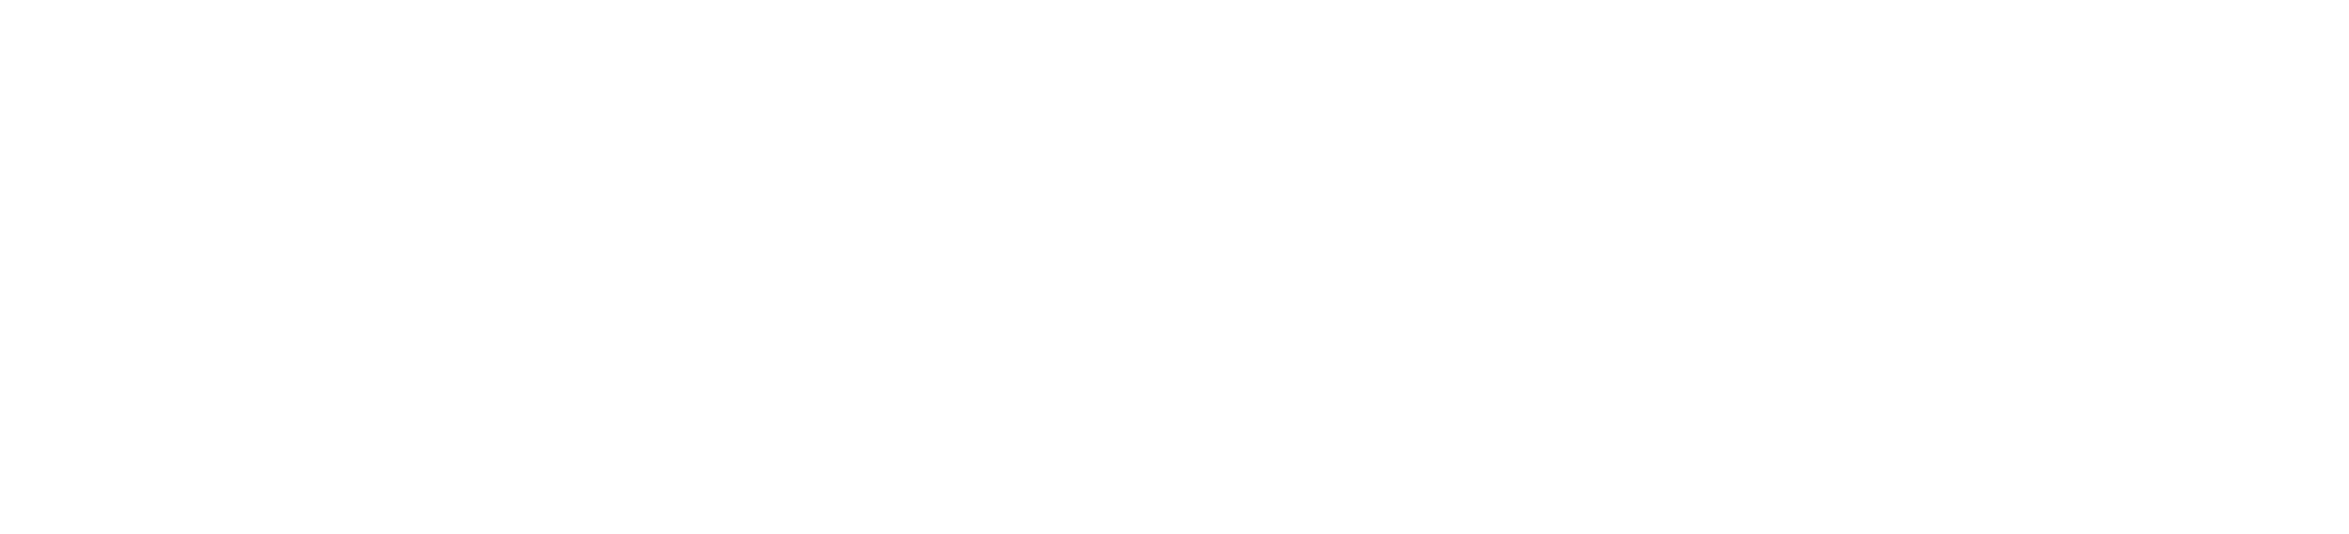 SCLogic Logo_All White-1